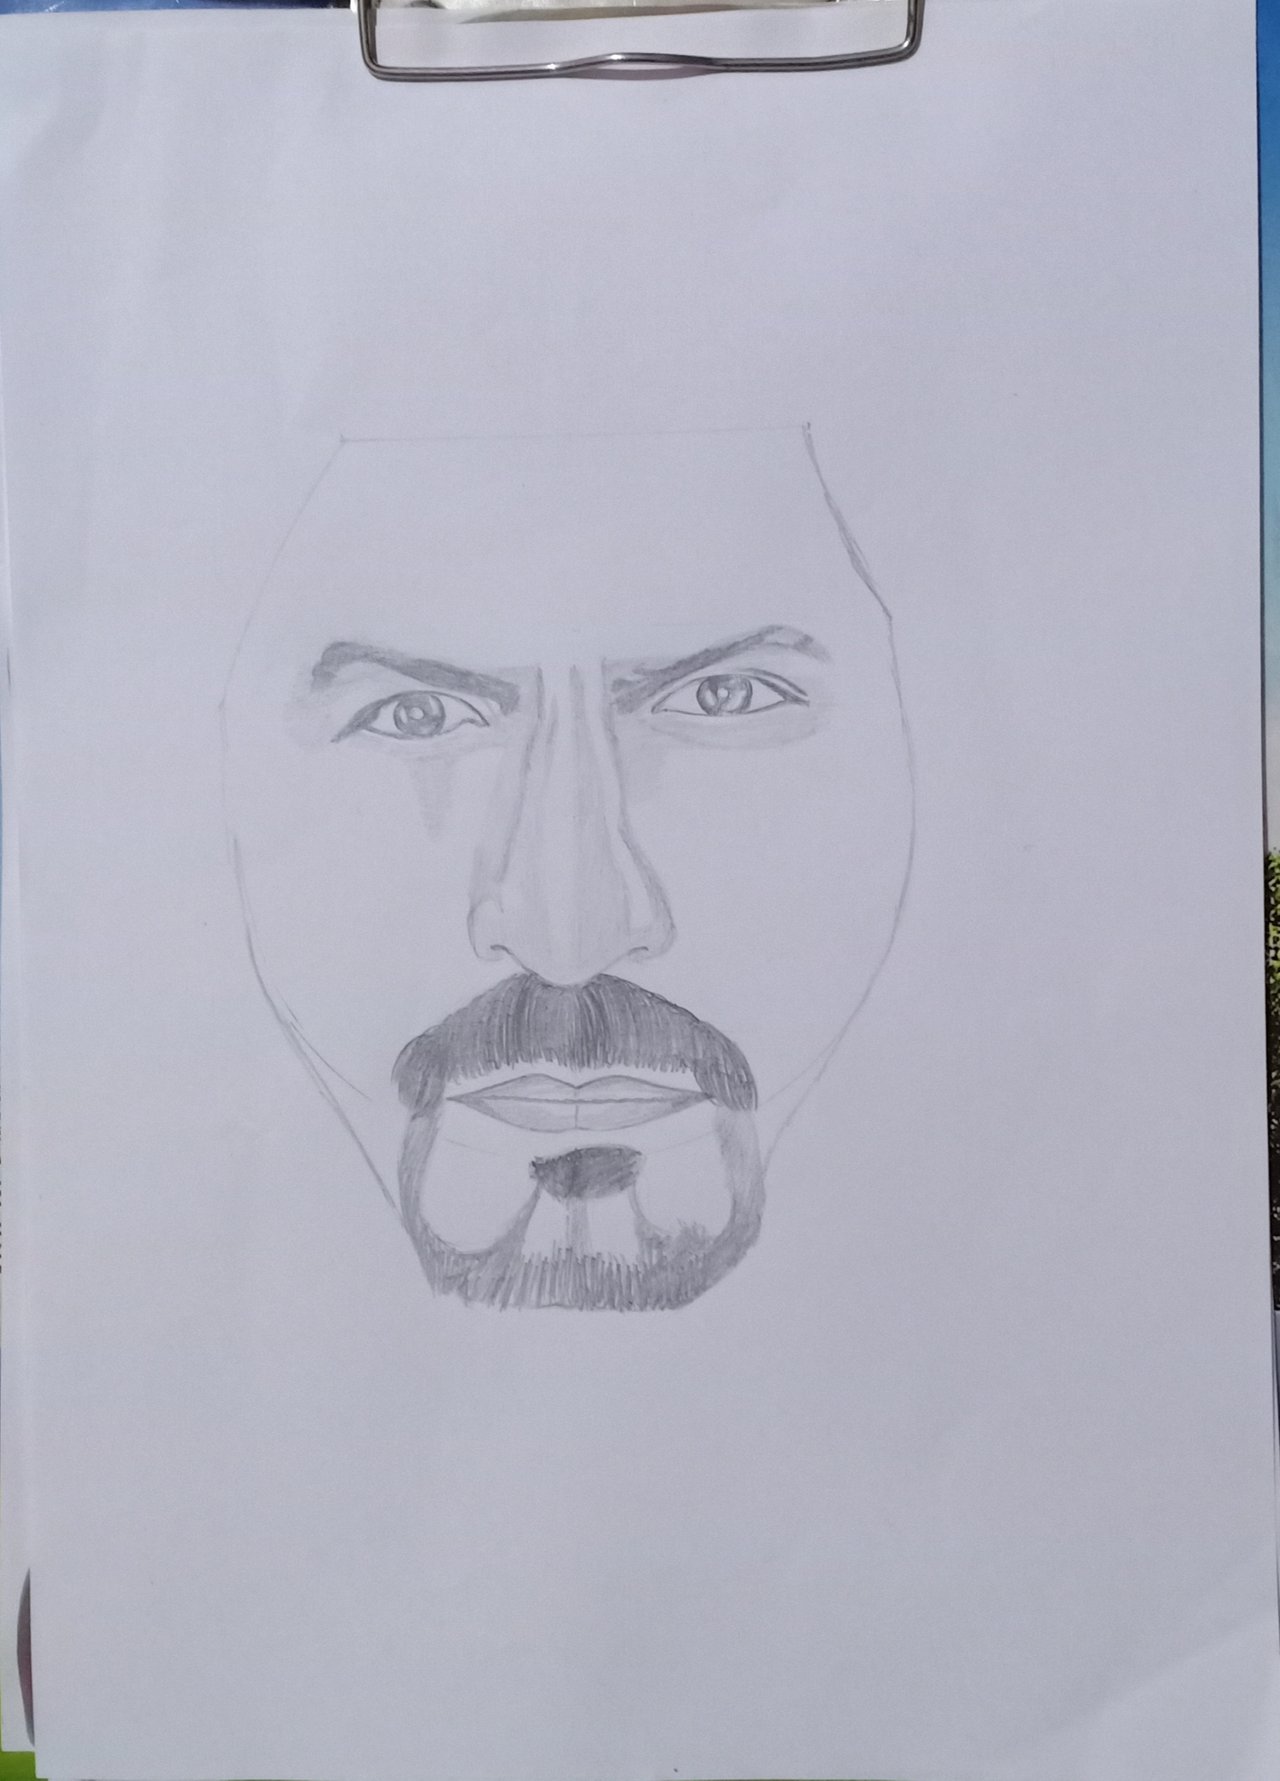 Shahrukh Khan - Drawing Skill